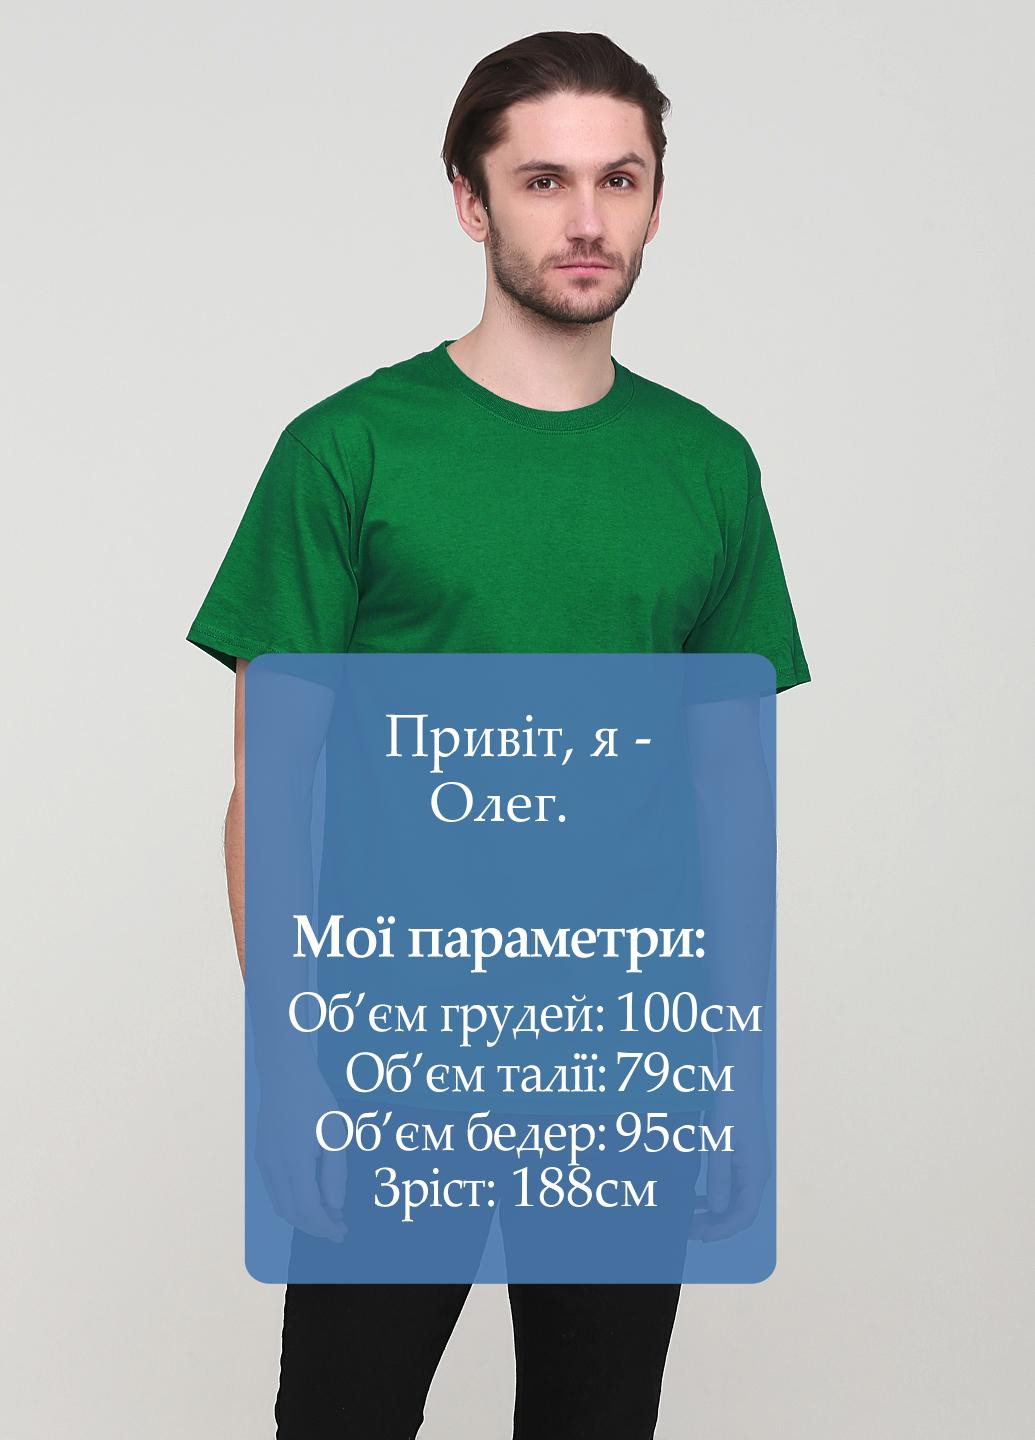 Зеленая летняя футболка Hanes